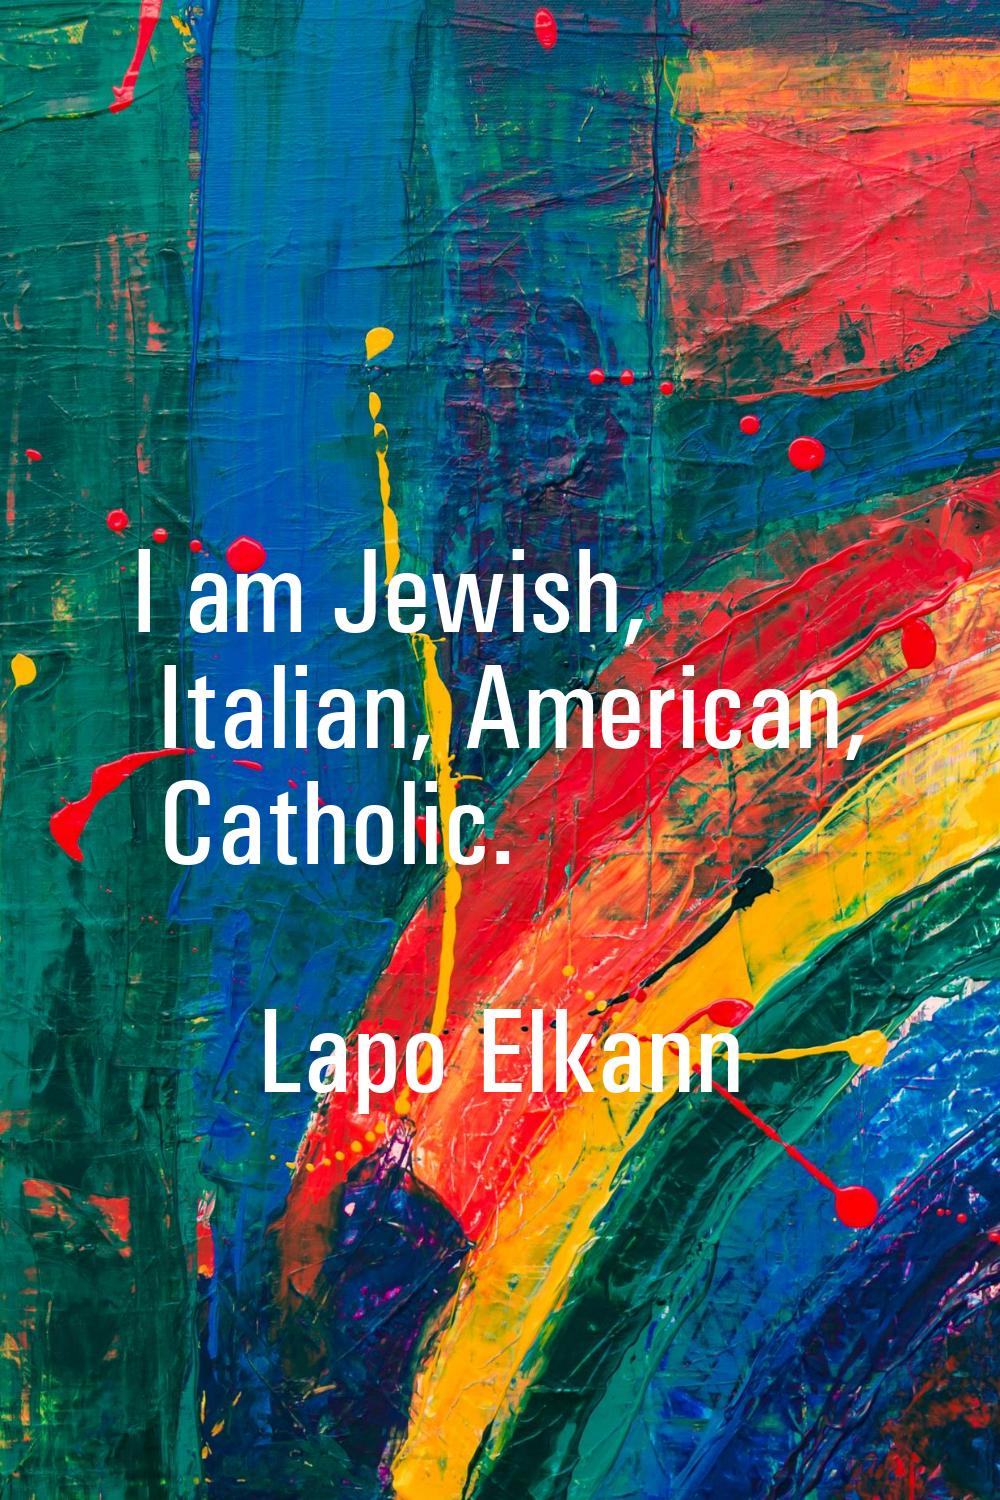 I am Jewish, Italian, American, Catholic.